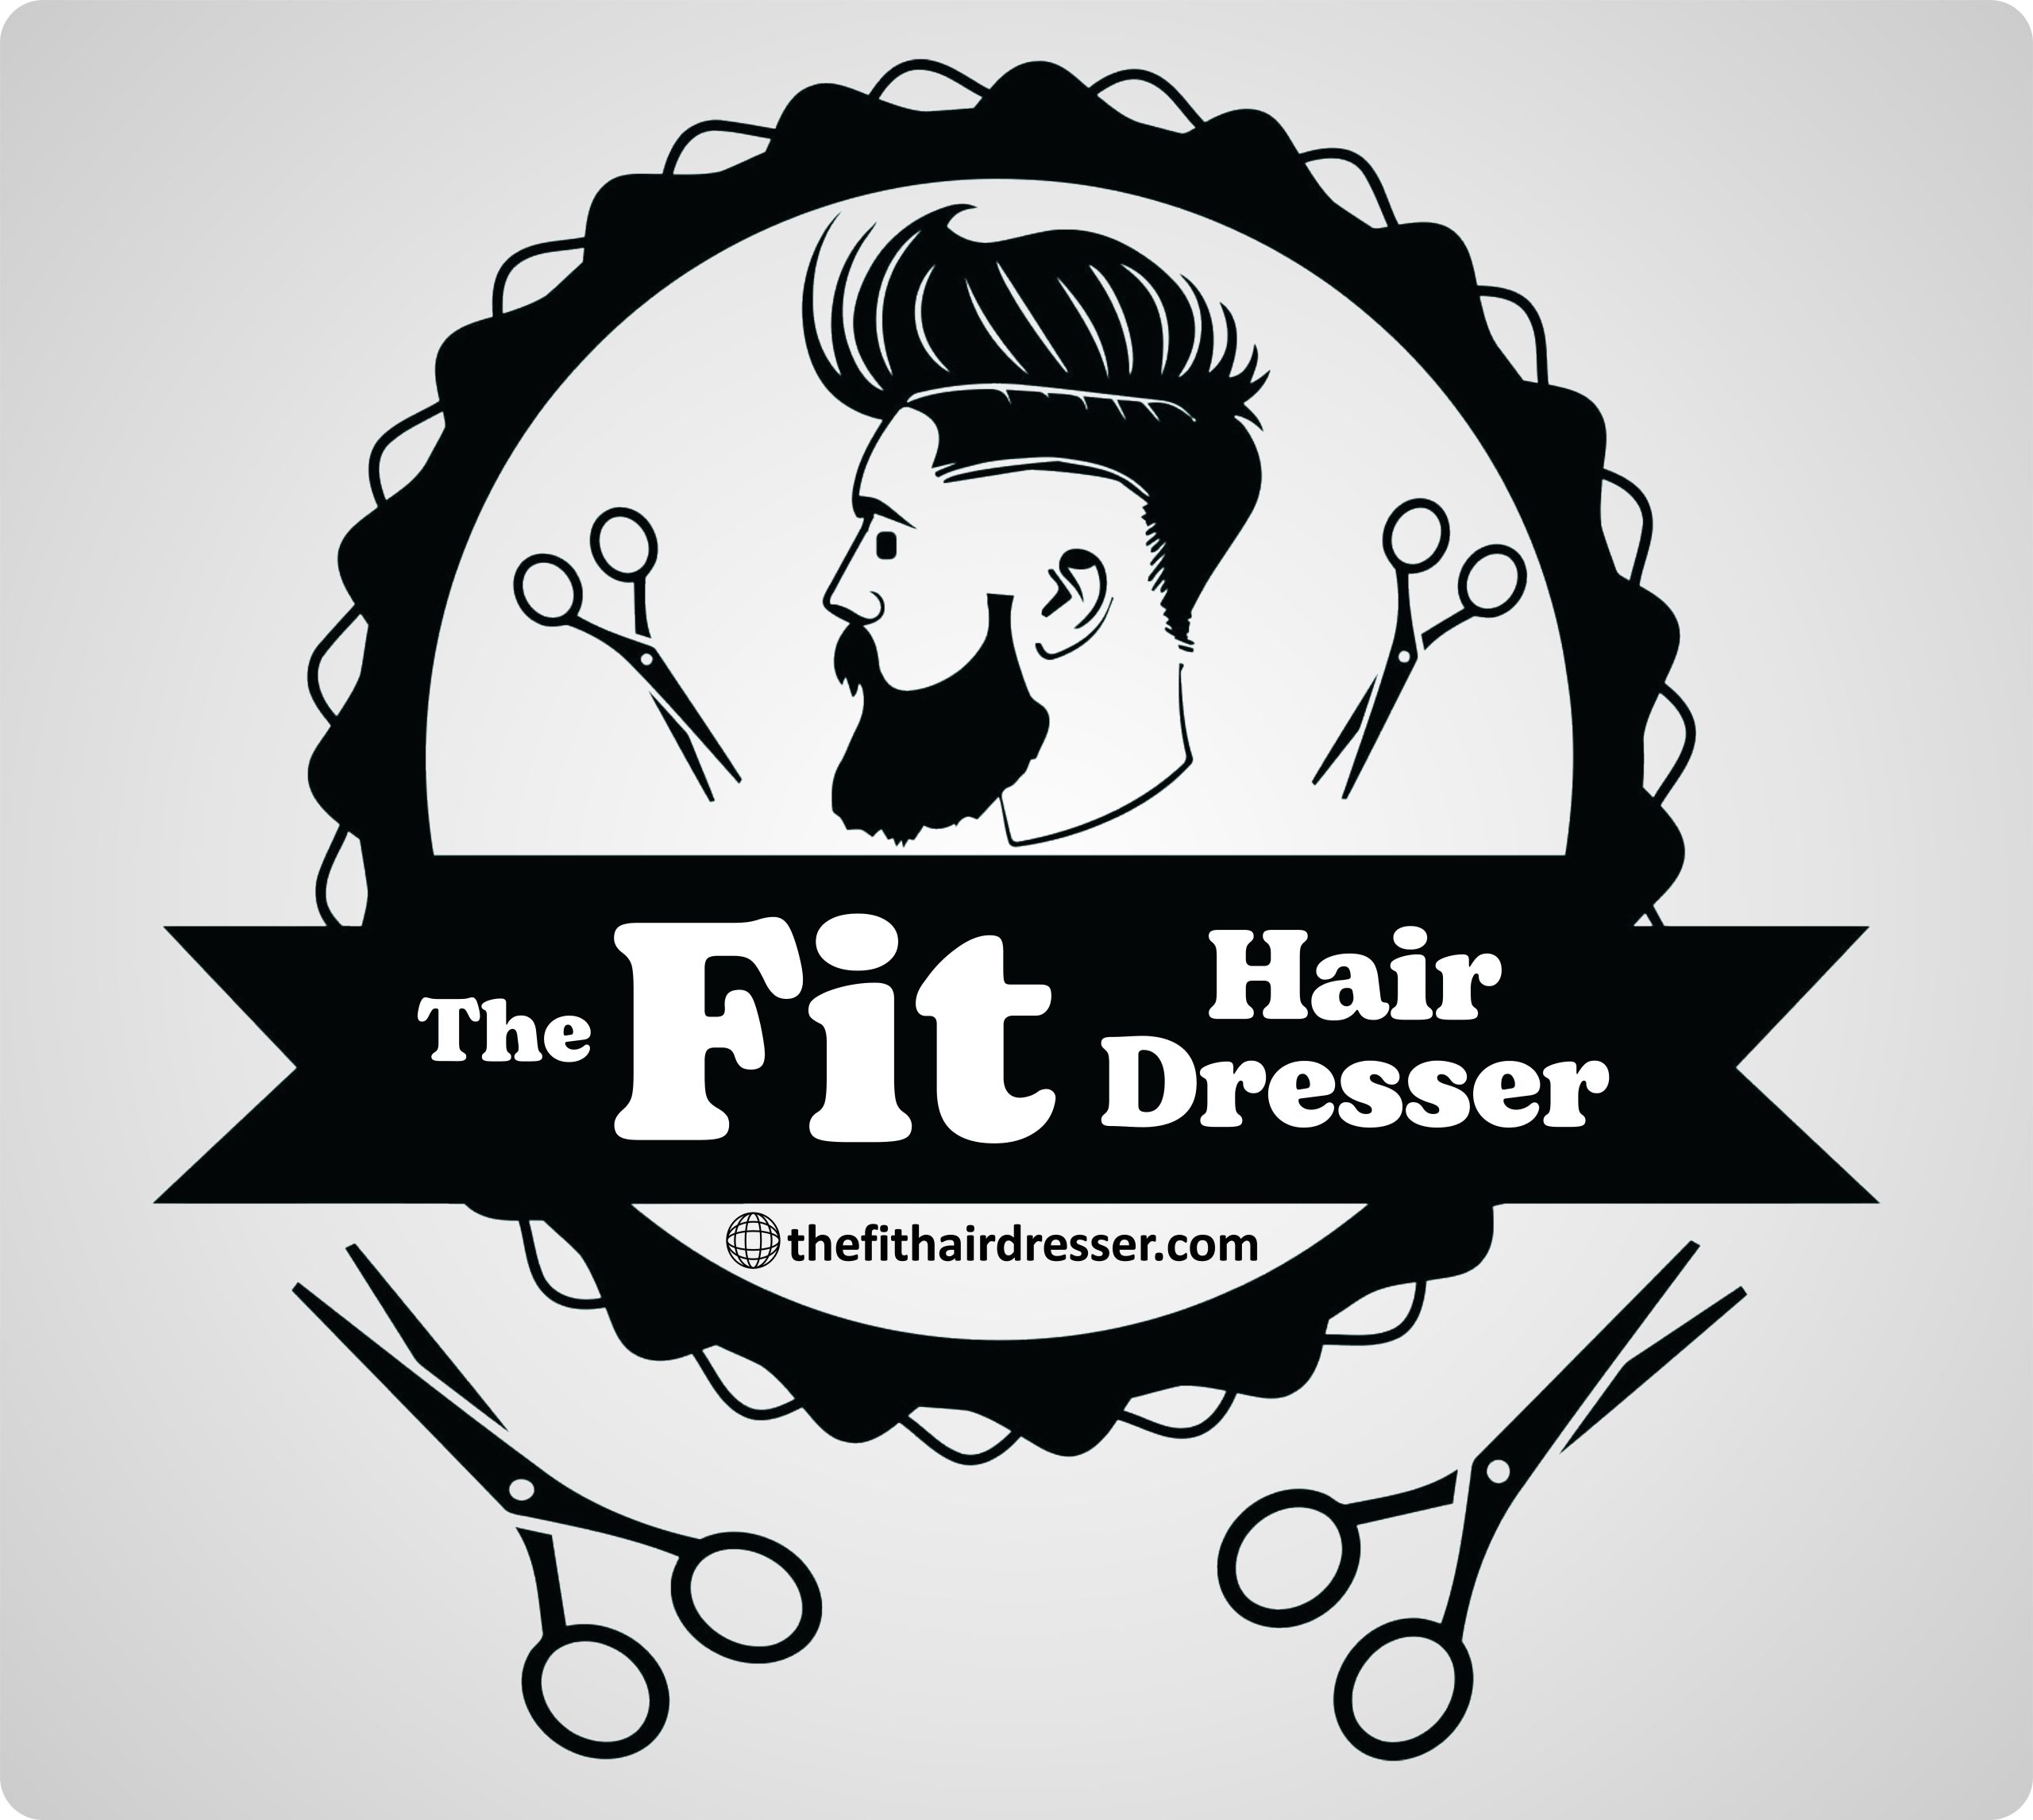 The Fit Hair Dresser